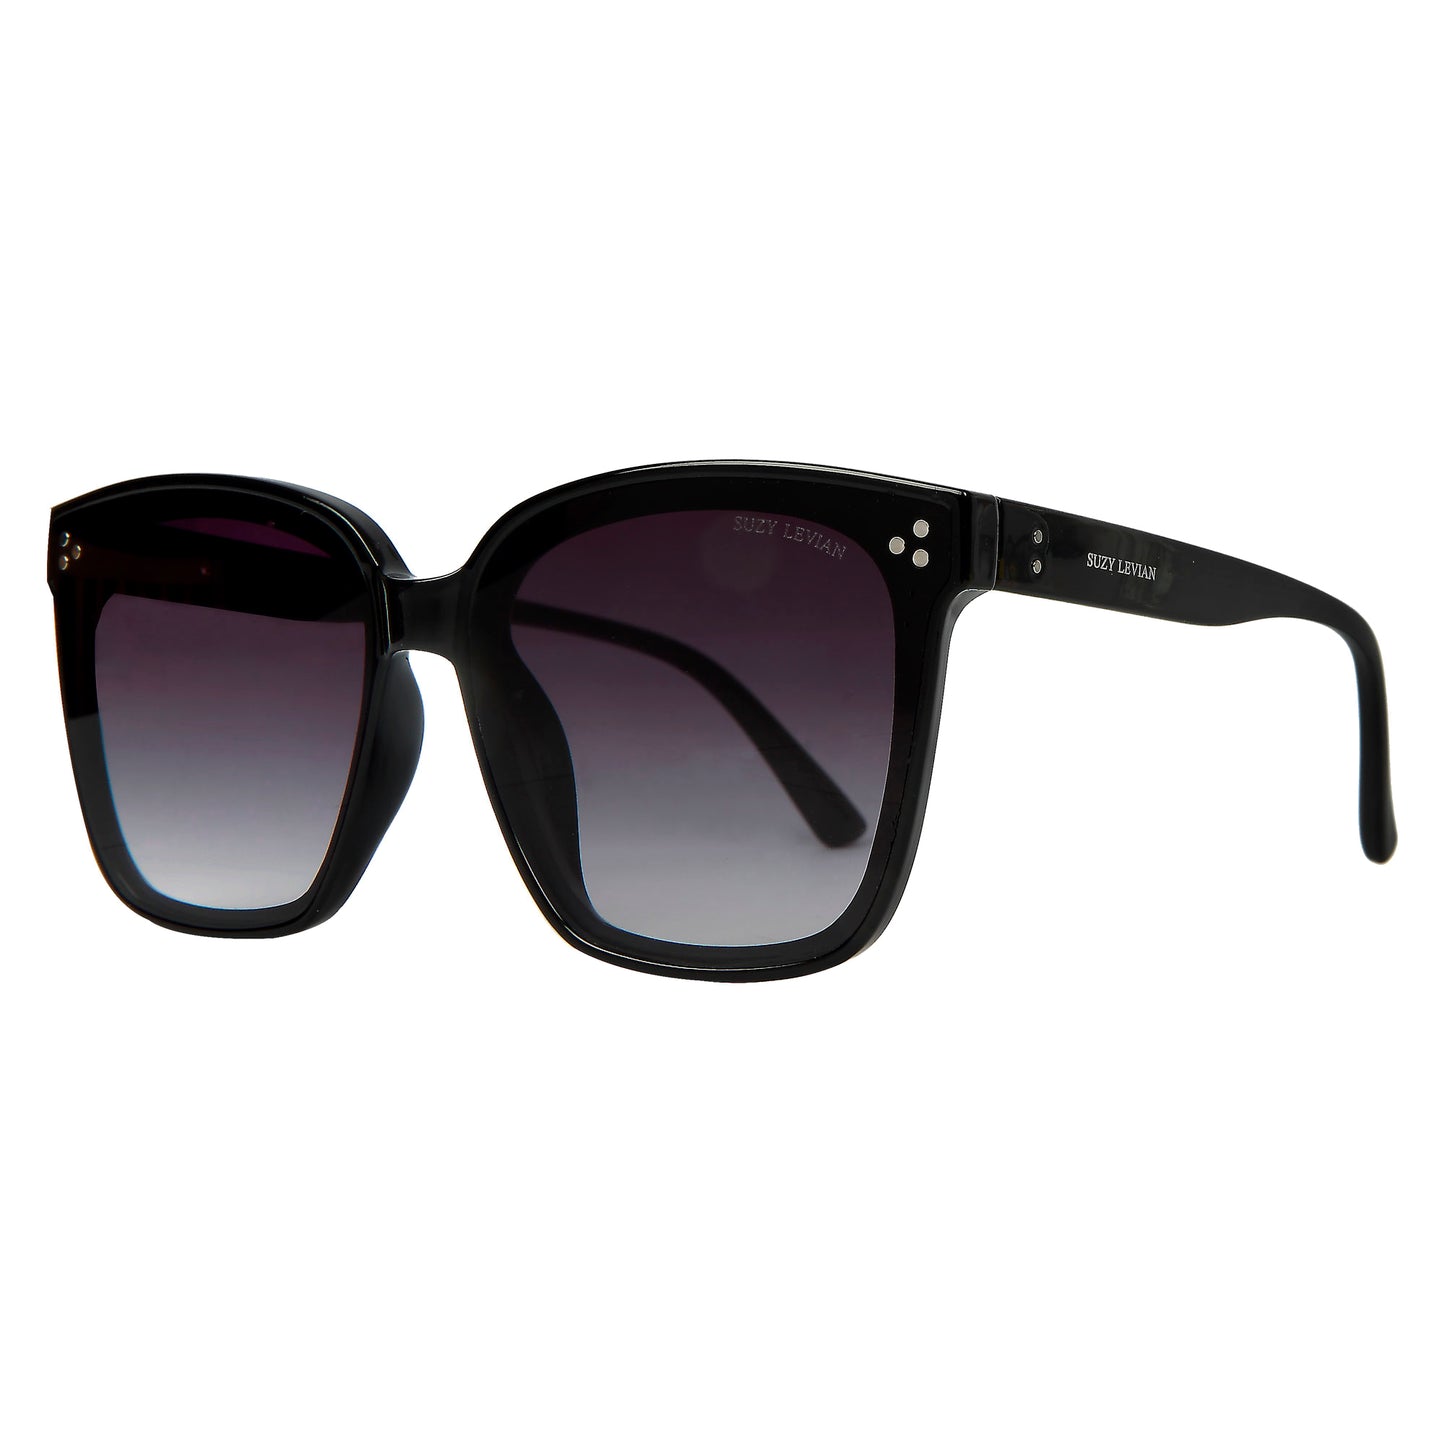 Suzy Levian Women's Black Oversize Square Lens Silver Accent Sunglasses